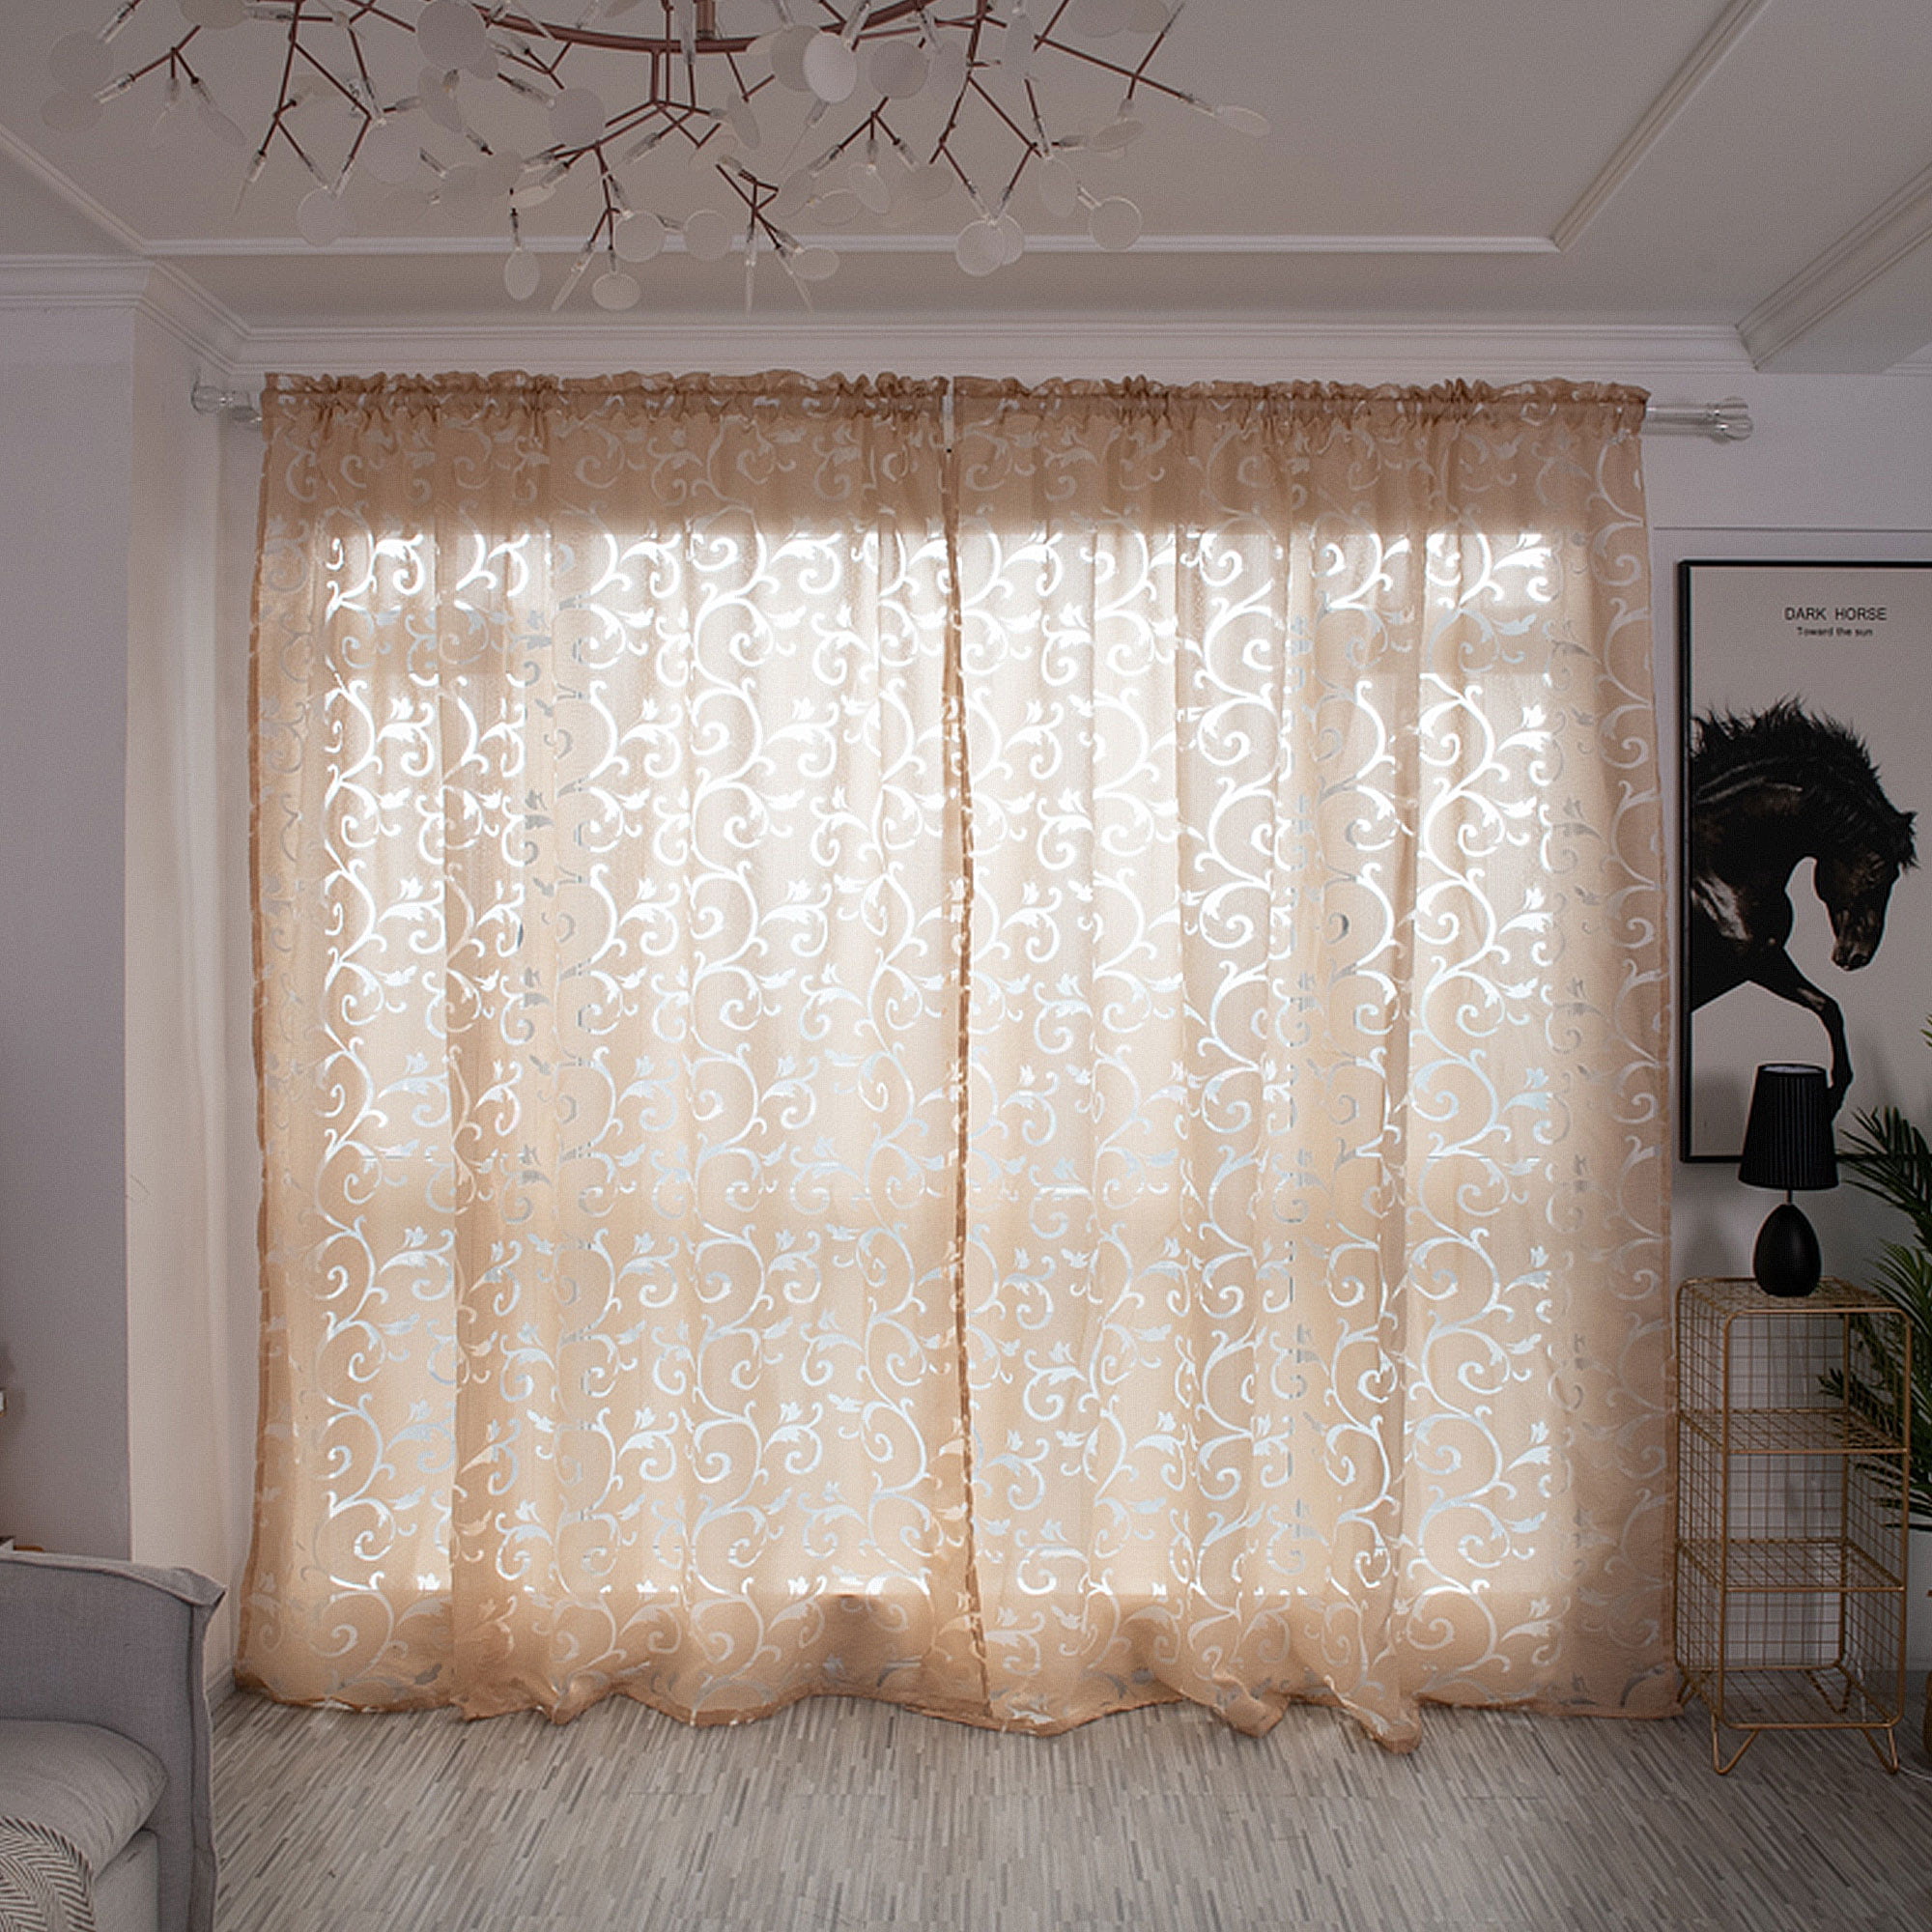 Floral Room Door Sheer Voile Window Valances Panel Scarf Curtain Drape 